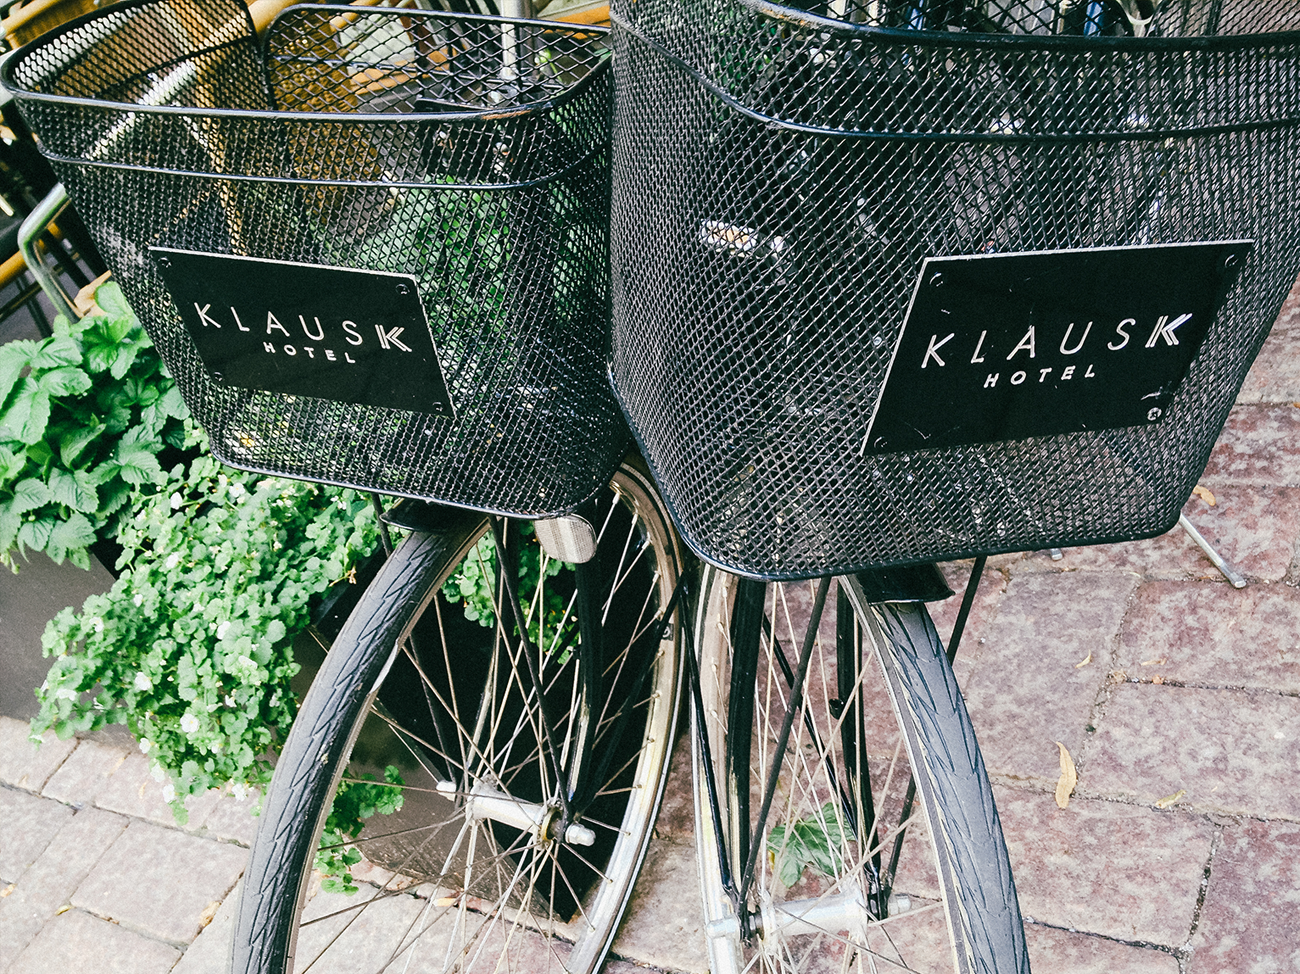 Klaus K Design Hotel Helsinki